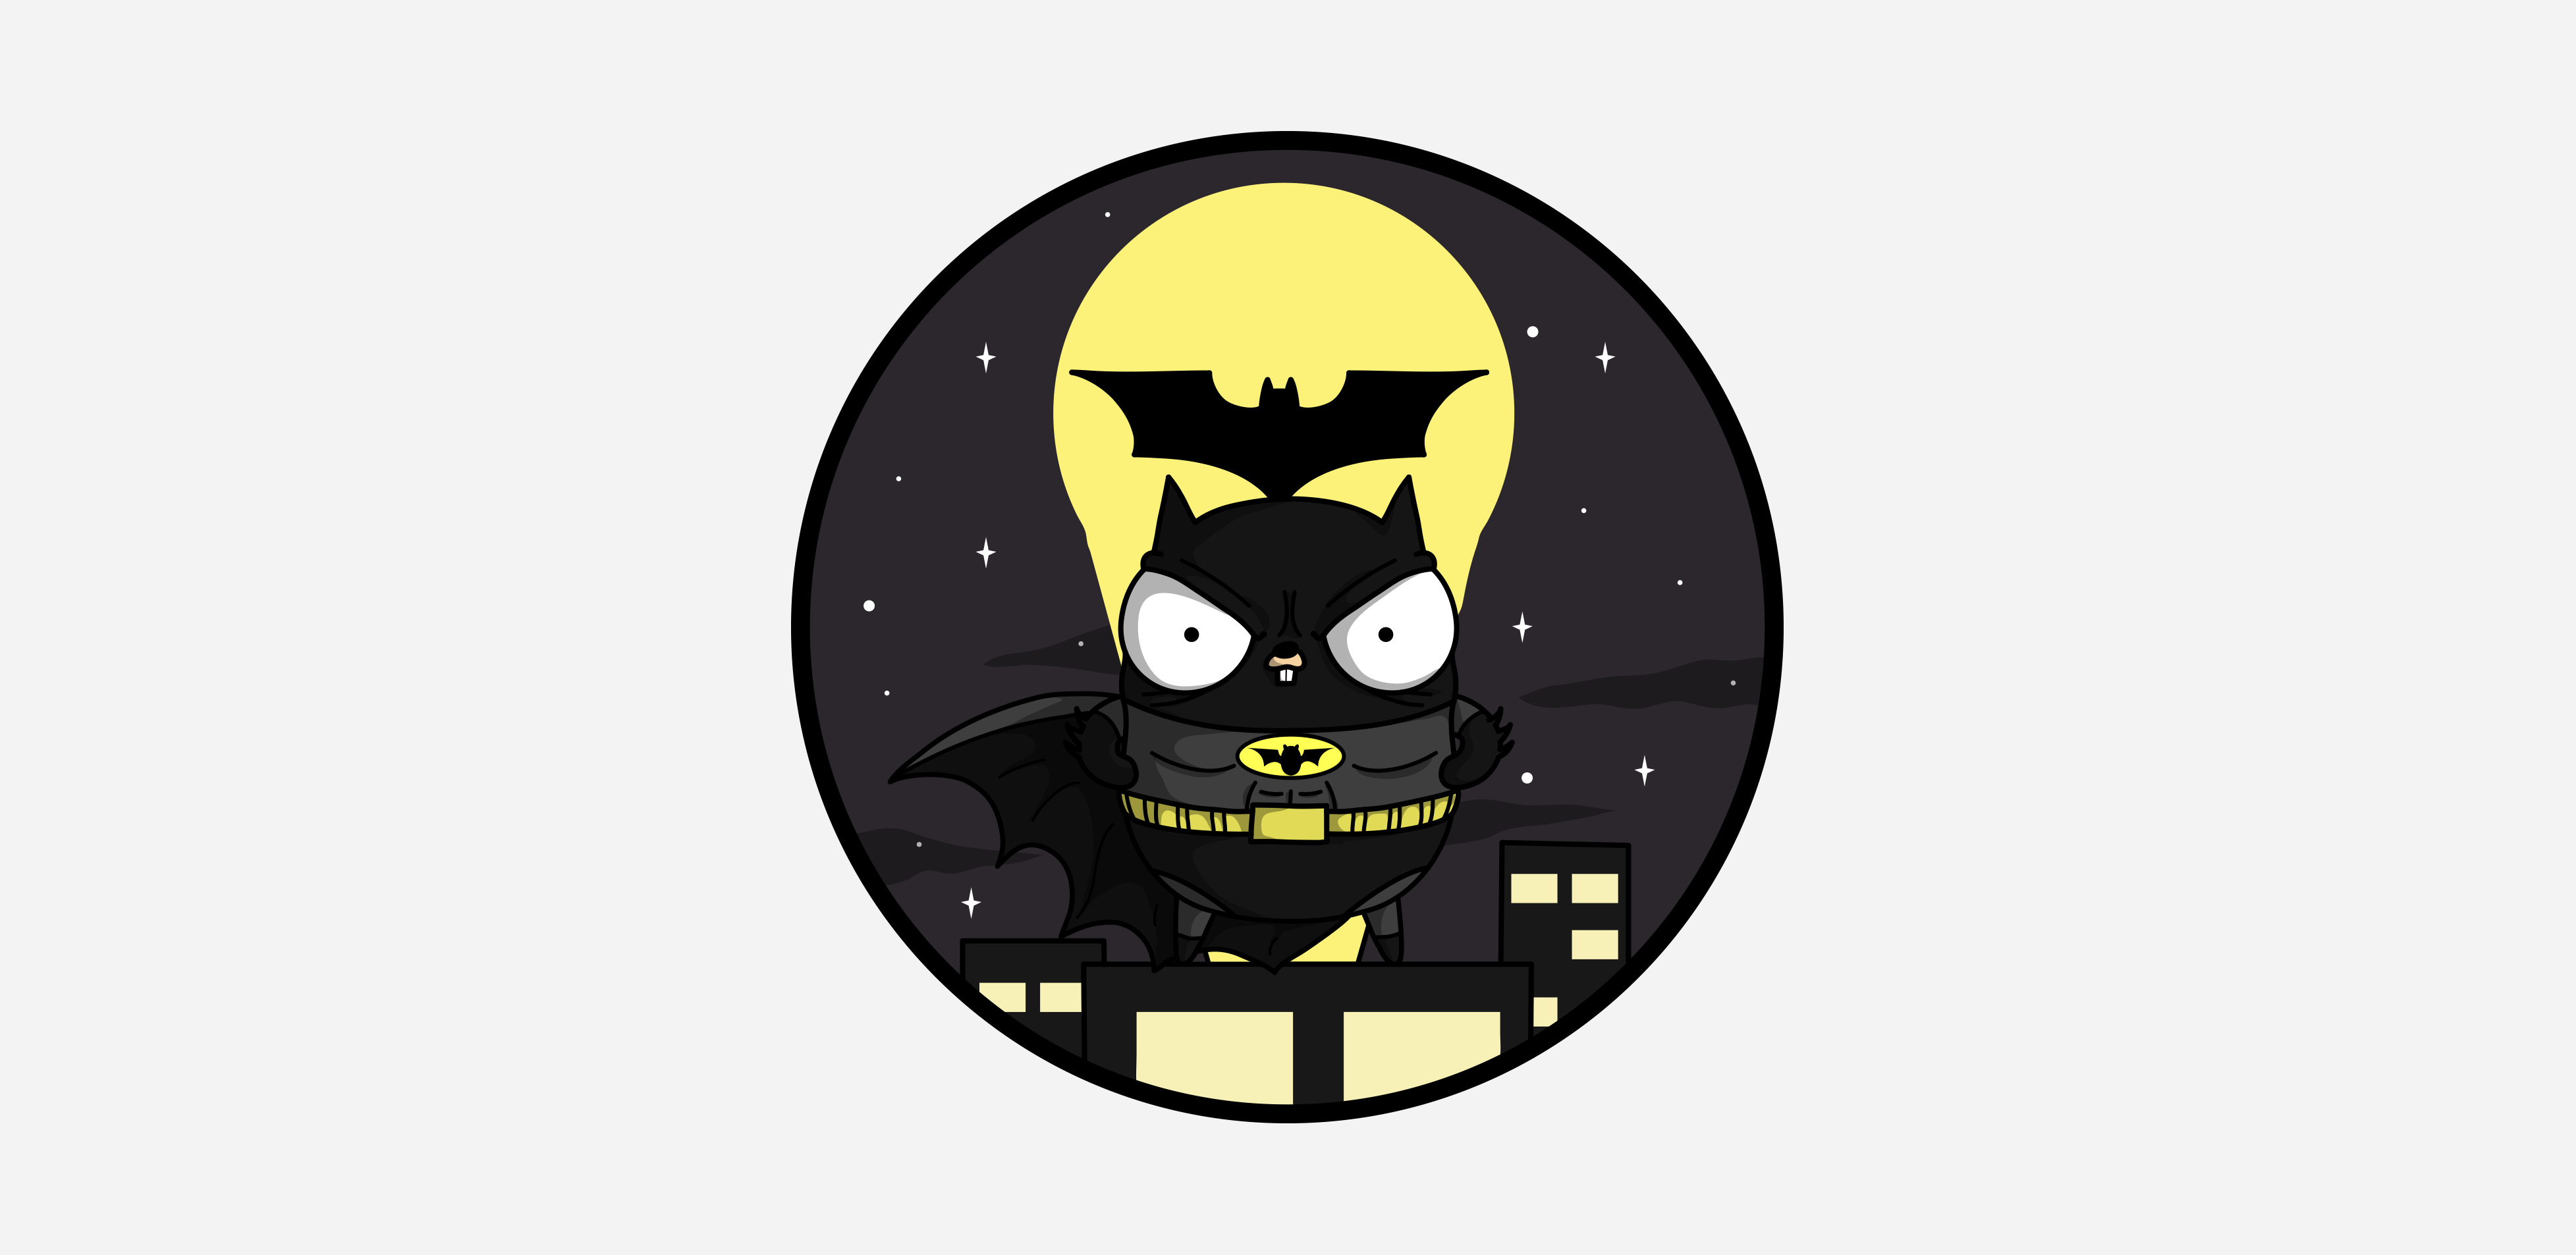 Gopher Illustration Dressed as Batman